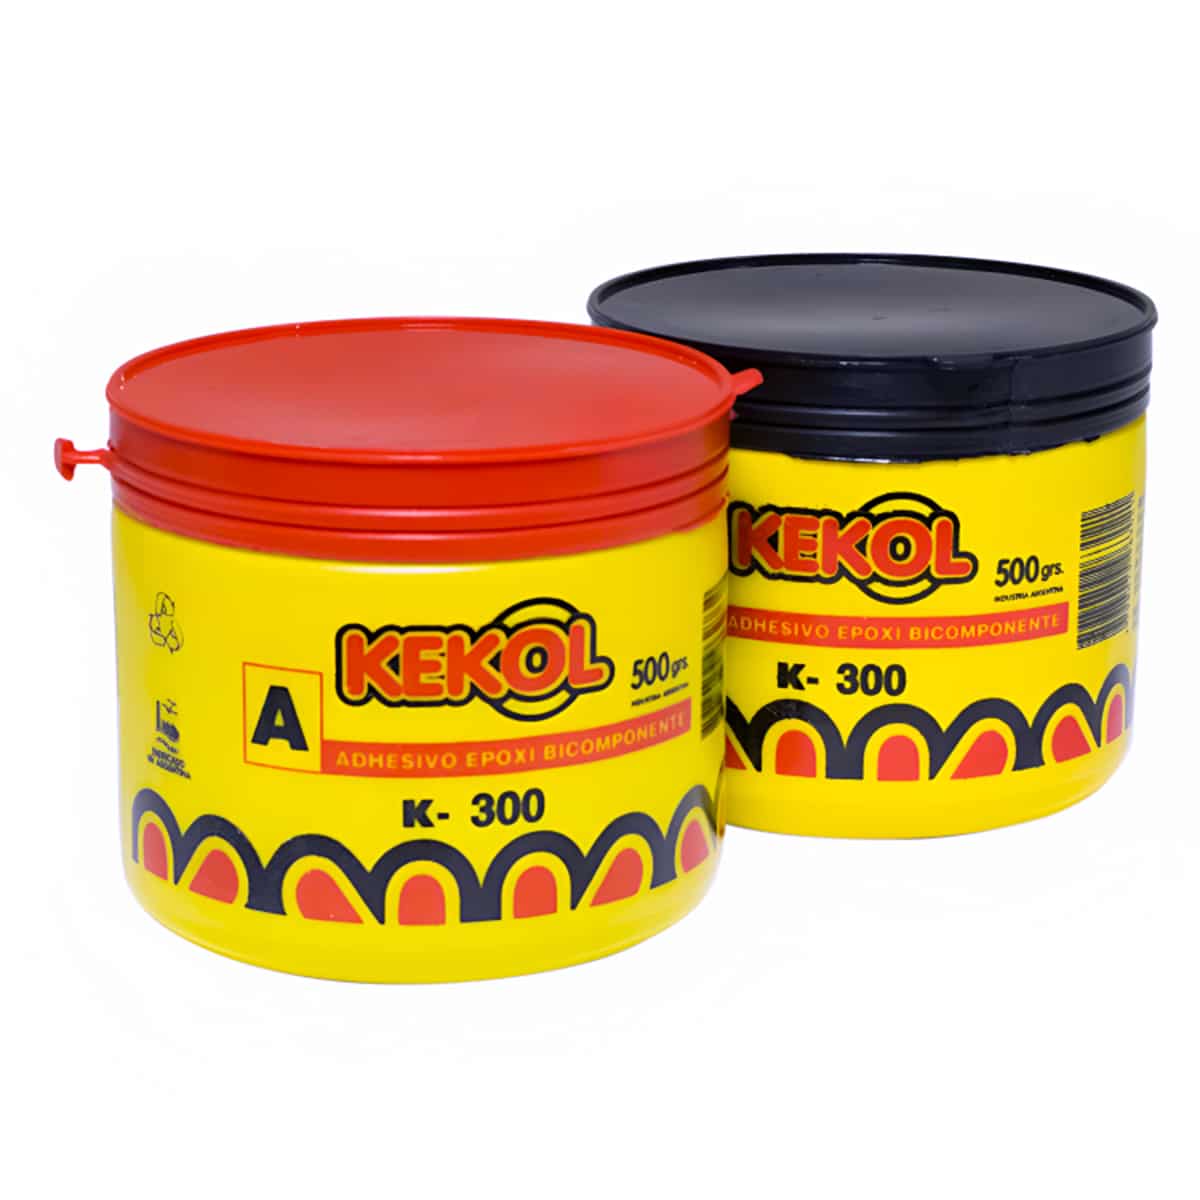 Adhesivo Epoxi Bicomponente Kekol Pote 1 kg - Guala Soluciones Decorativas